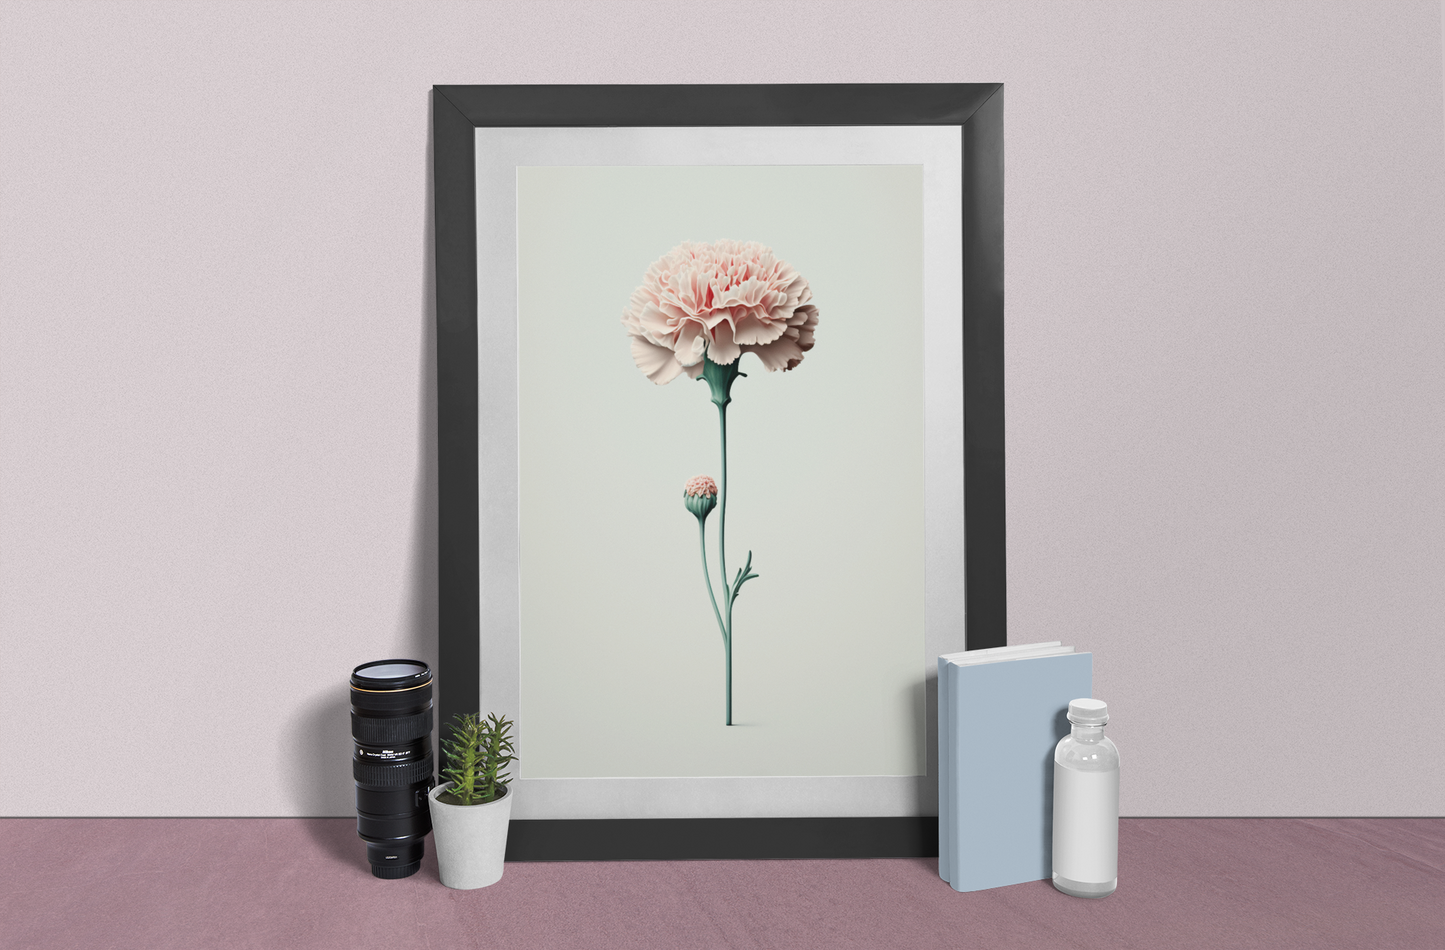 Minimalist Carnation Flower - Satin Posters